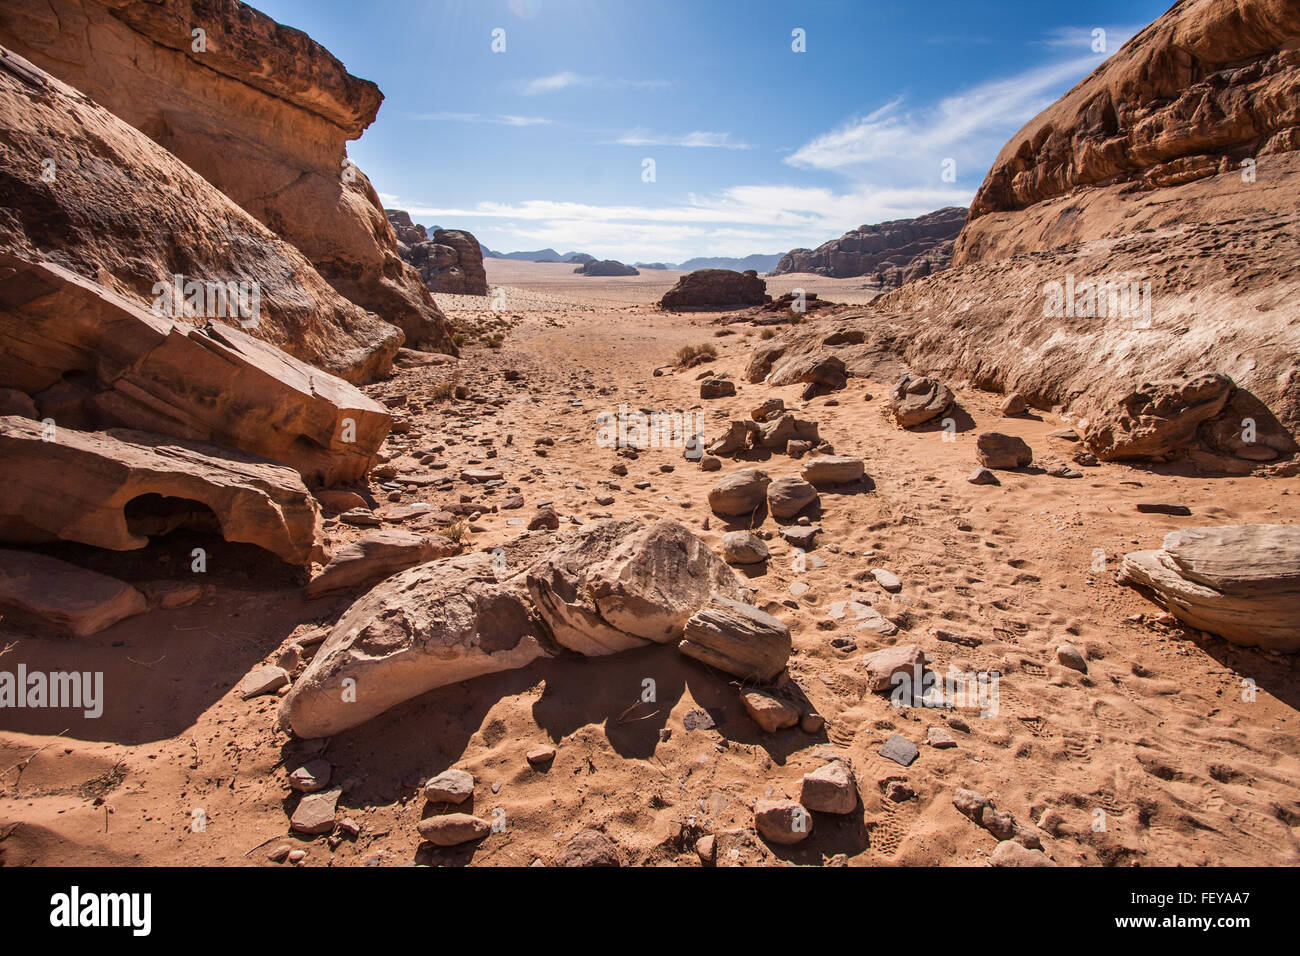 Stones in Wadi Rum desert reservation, Jordan. Stock Photo